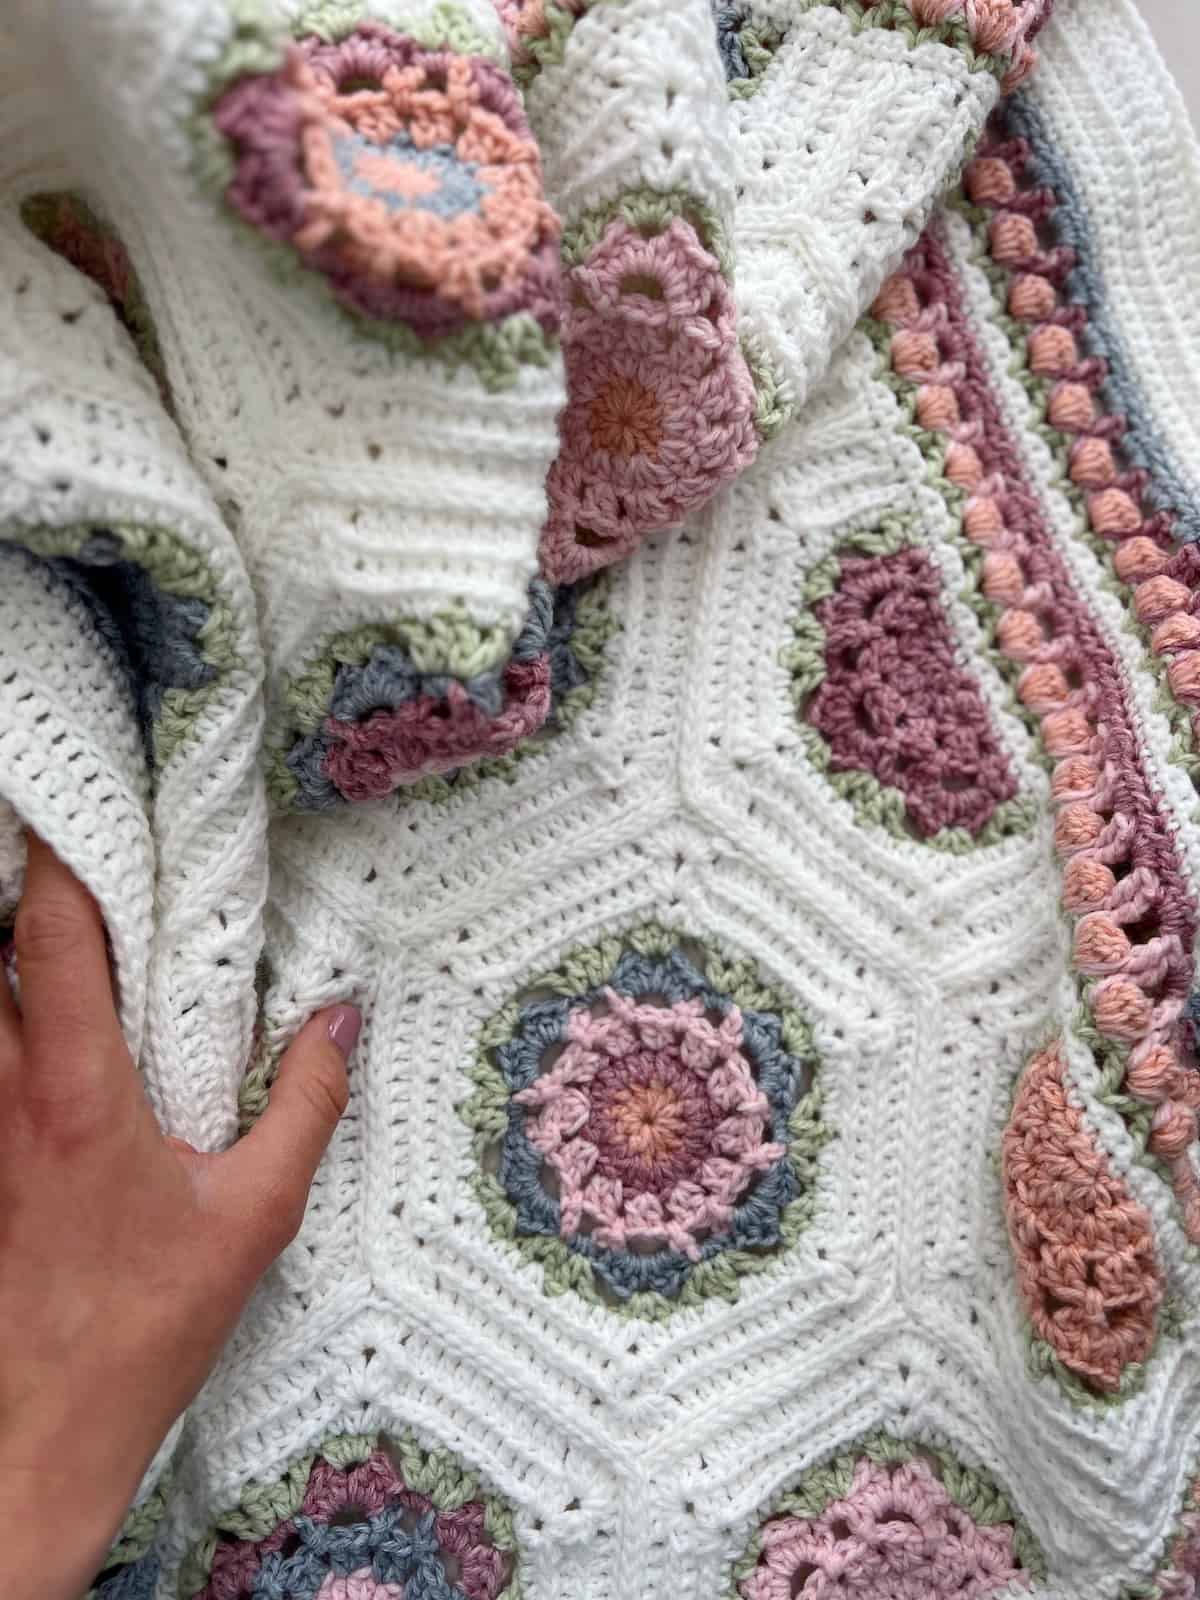 Persons hand scrunching up a crochet blanket made of hexagons and crochet half hexagons.